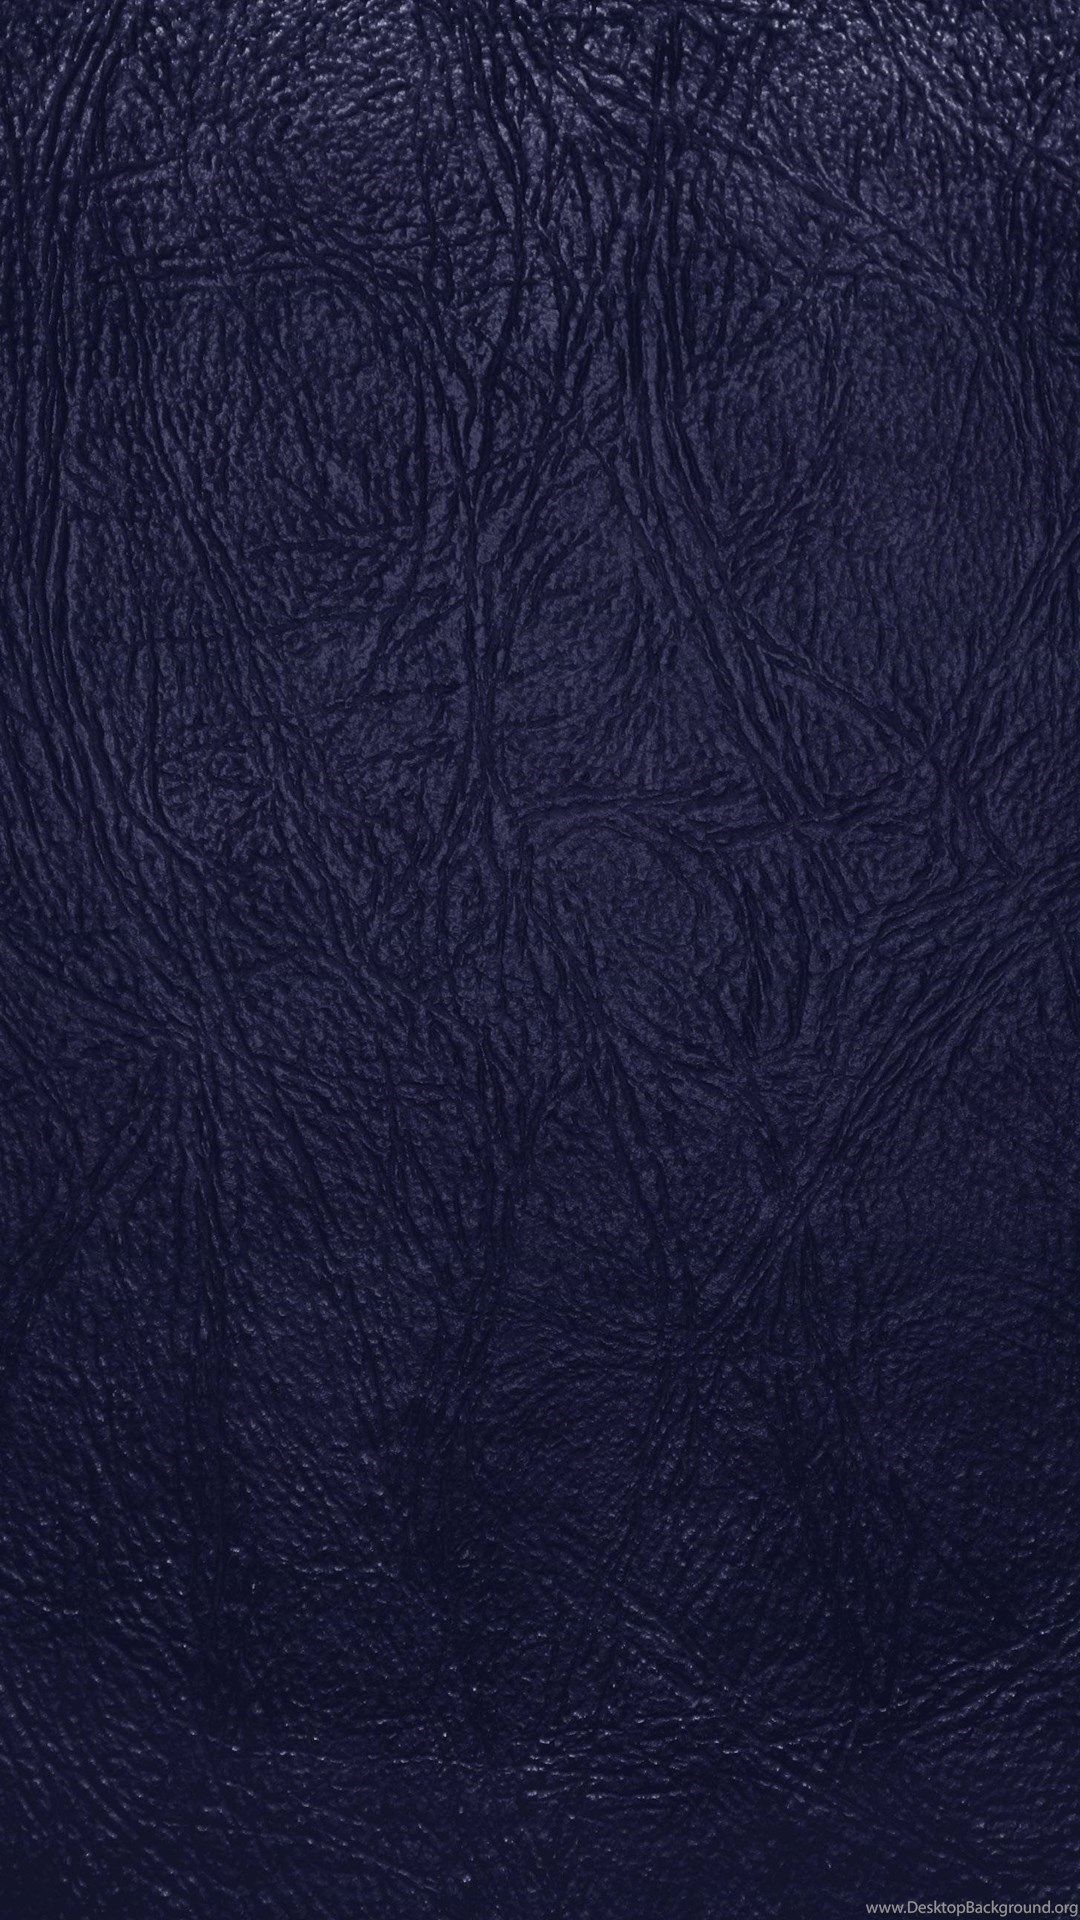 Solid Dark Blue Background Wallpaper, Abstract Wallpaper